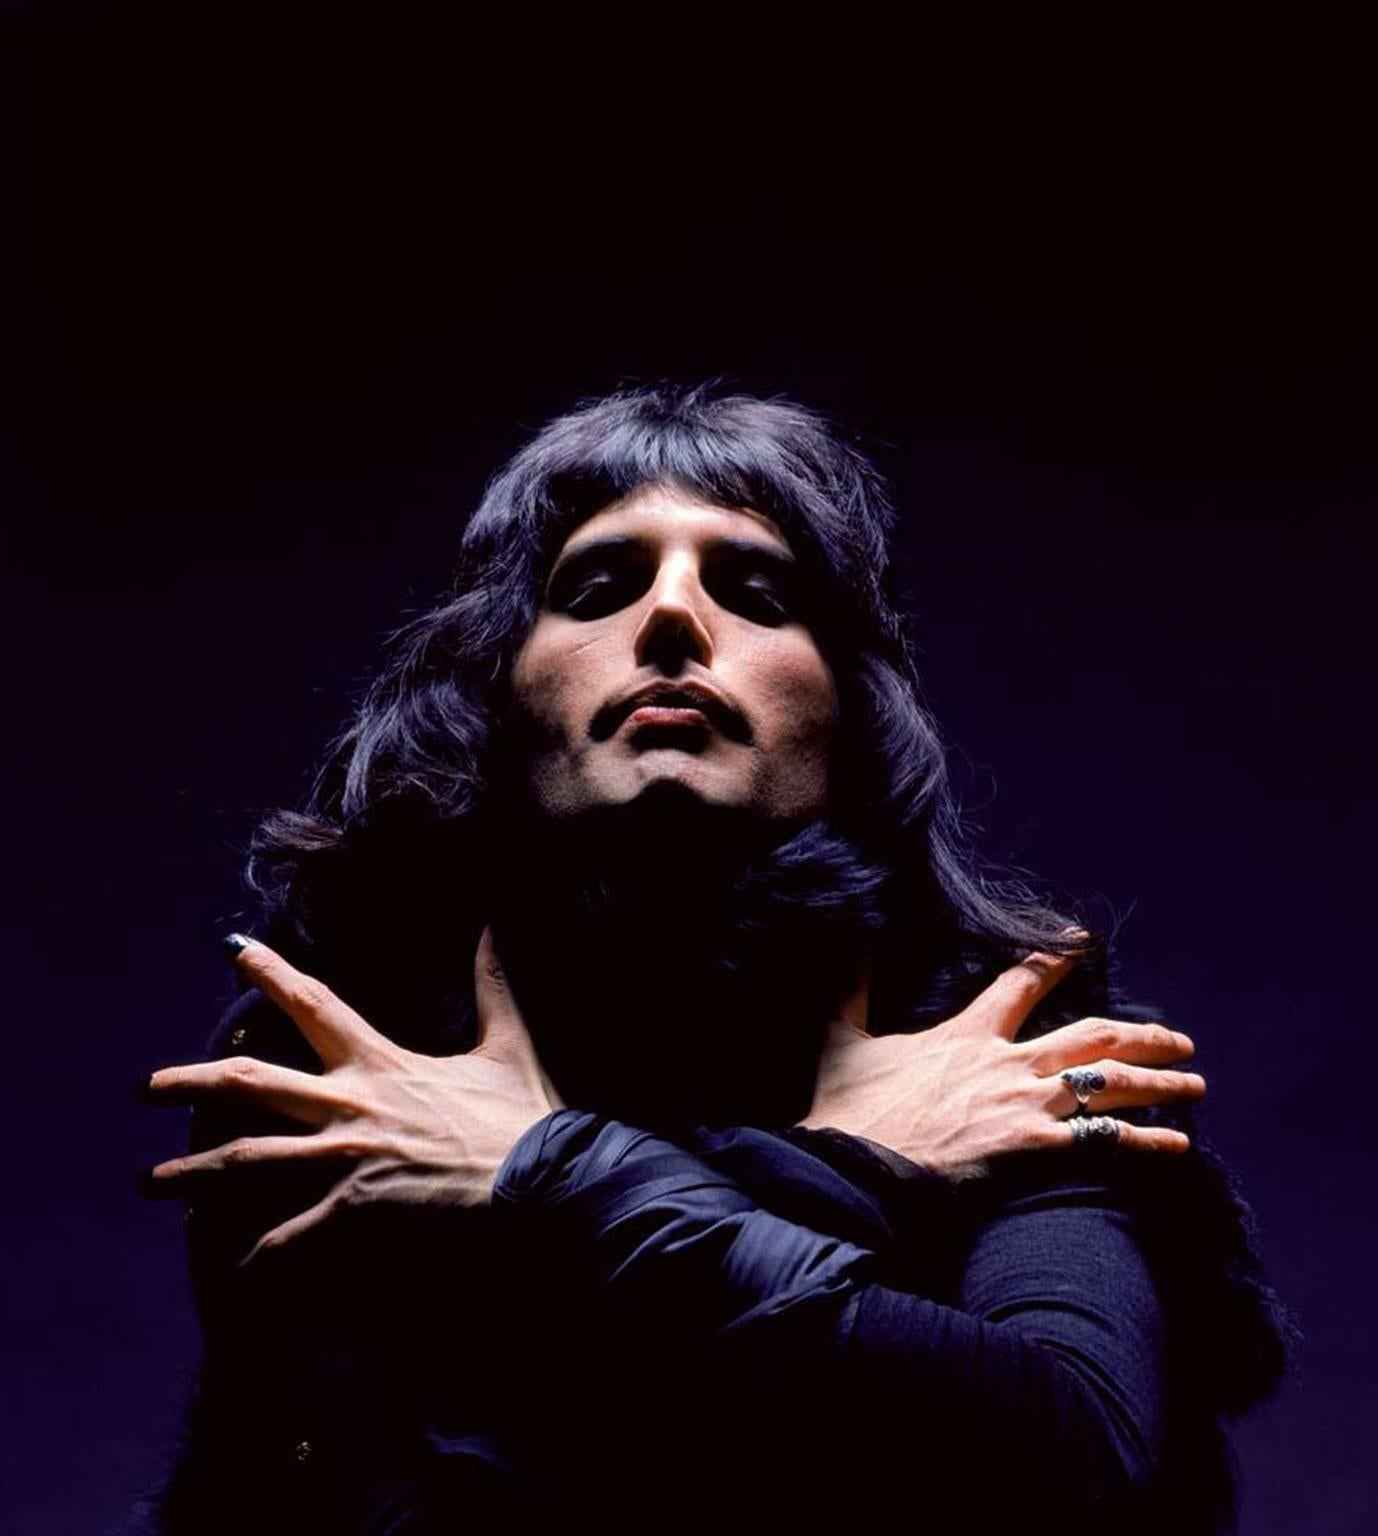 Mick Rock Portrait Photograph - Freddie Mercury Queen II Sessions